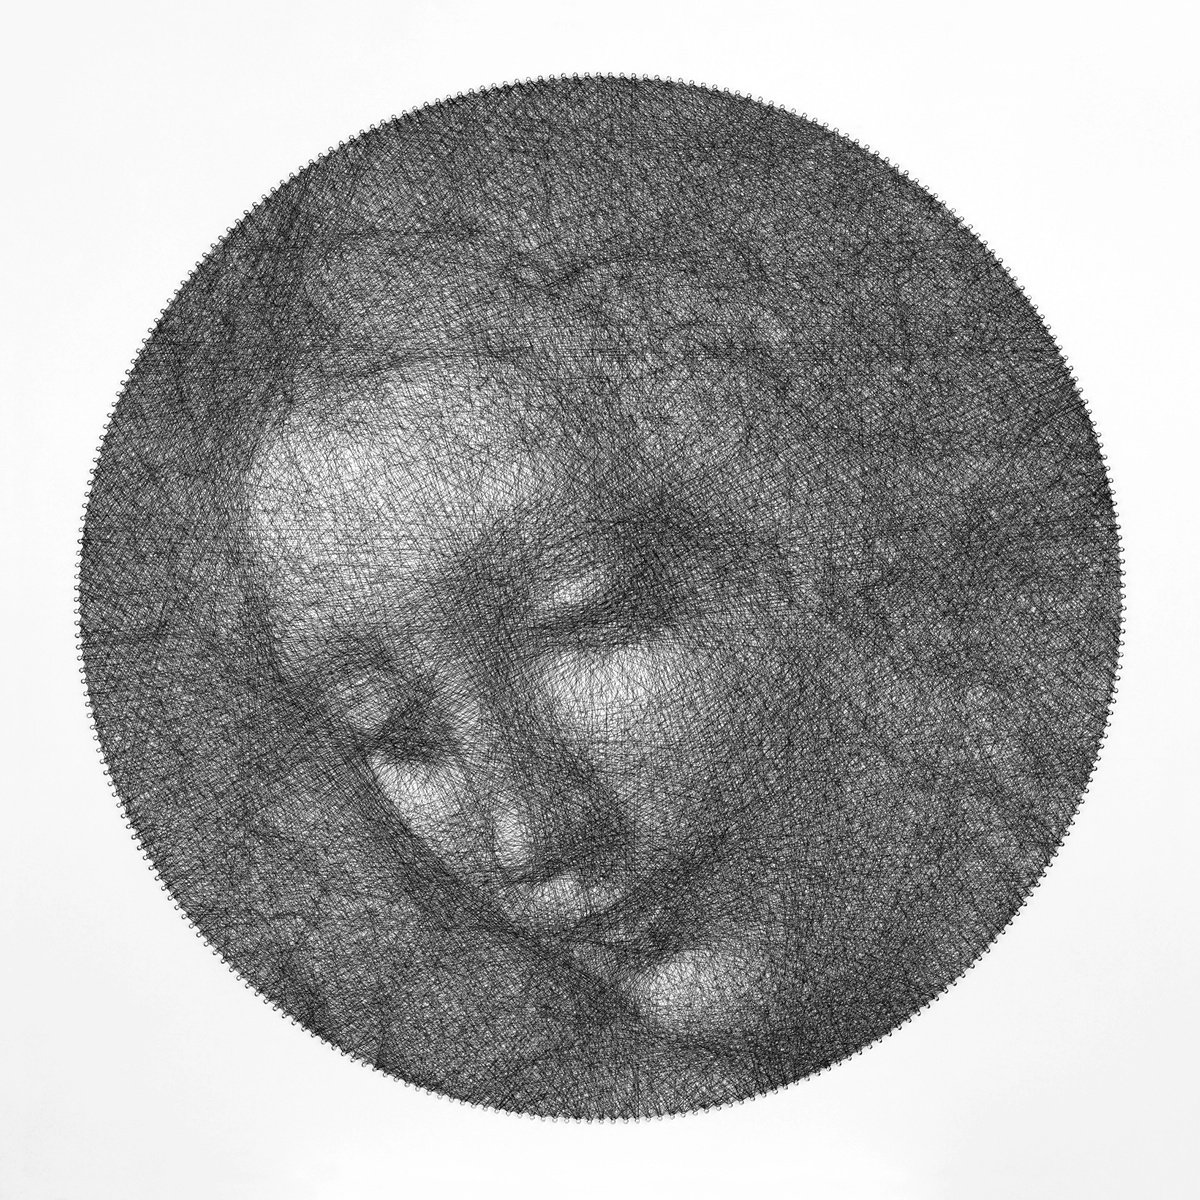 La Scapigliata (The Lady with Dishevelled Hair) by Leonardo da Vinci string art reproducti... by Andrey Saharov